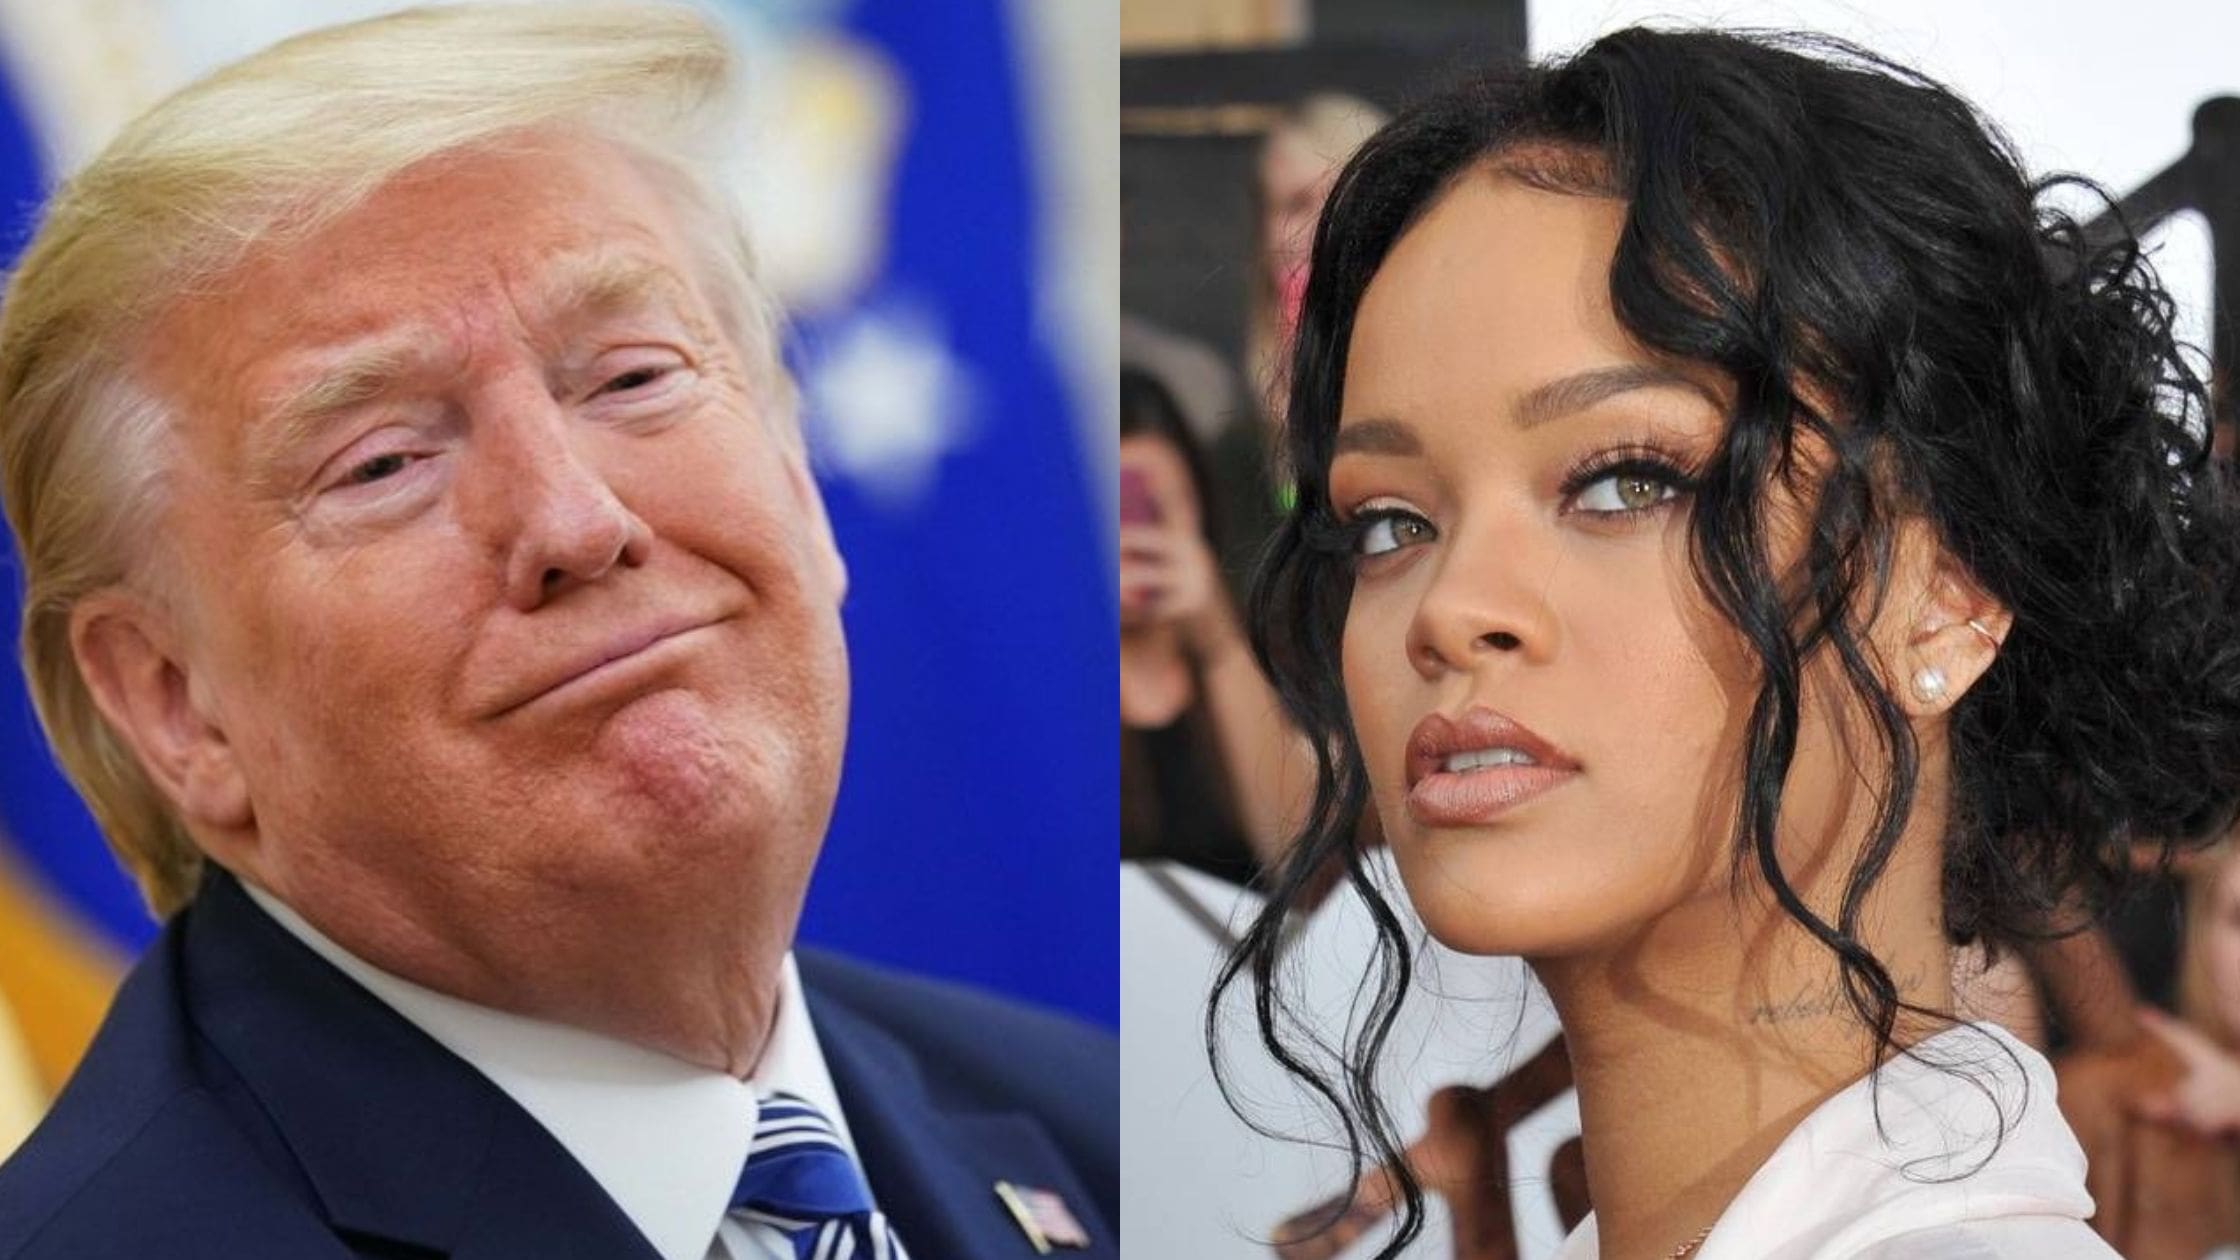 Trump and Rihanna